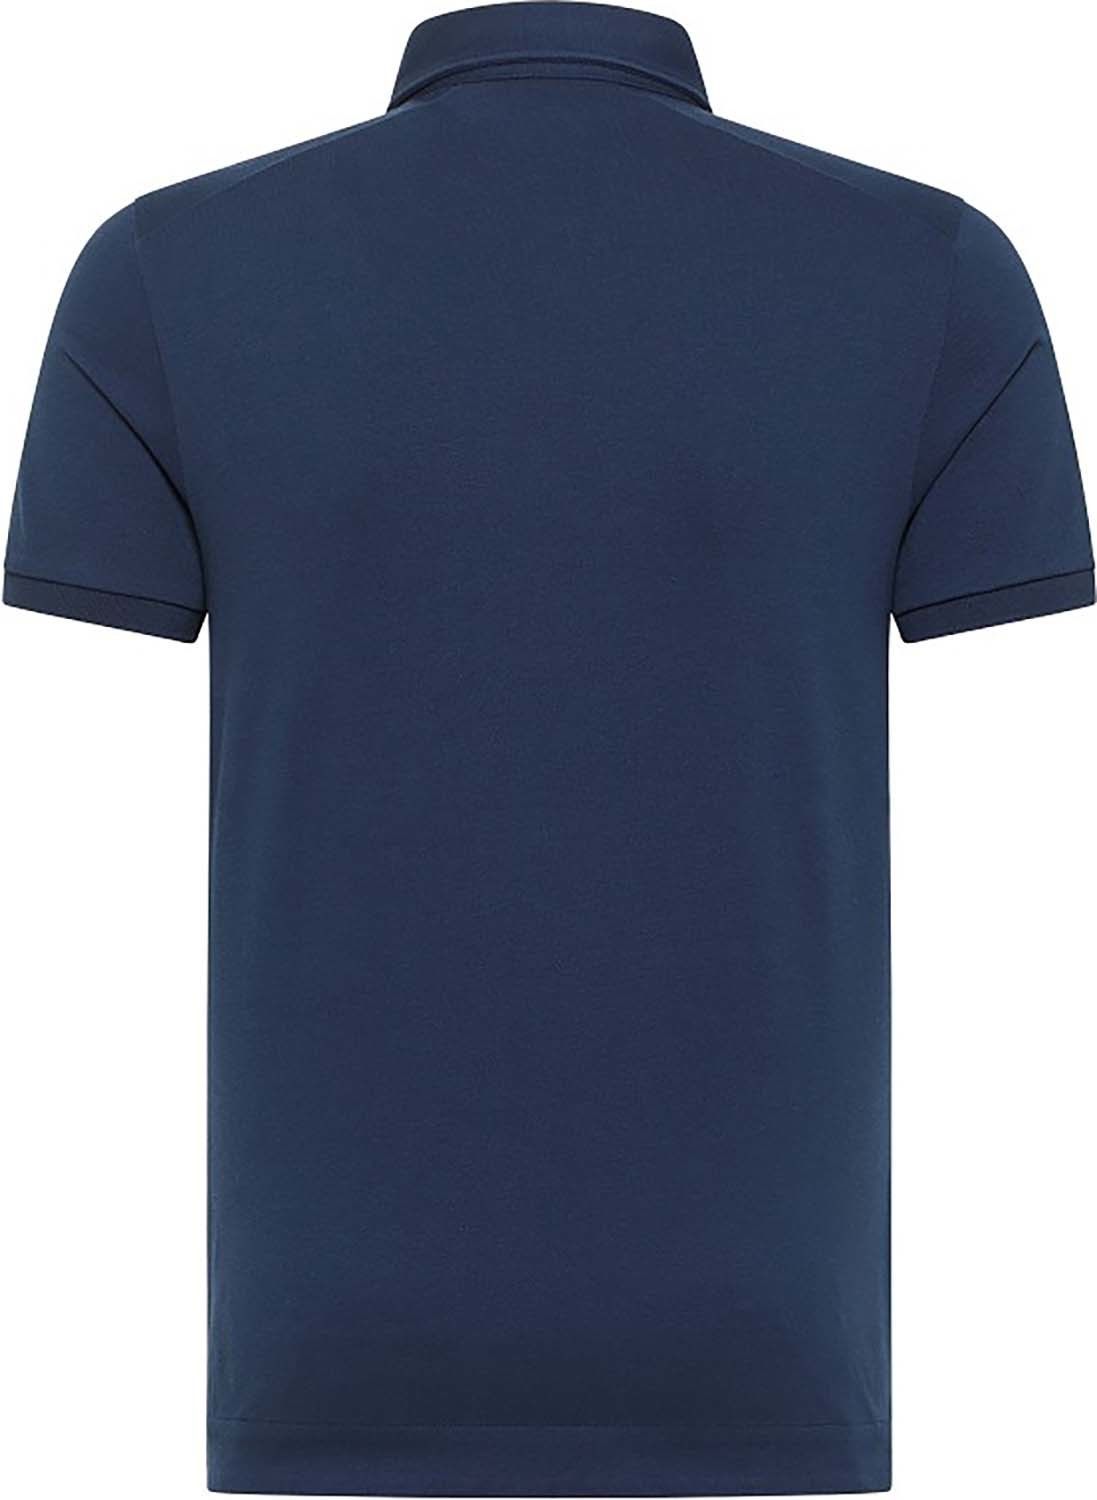 Blue Industry T-shirt Navy